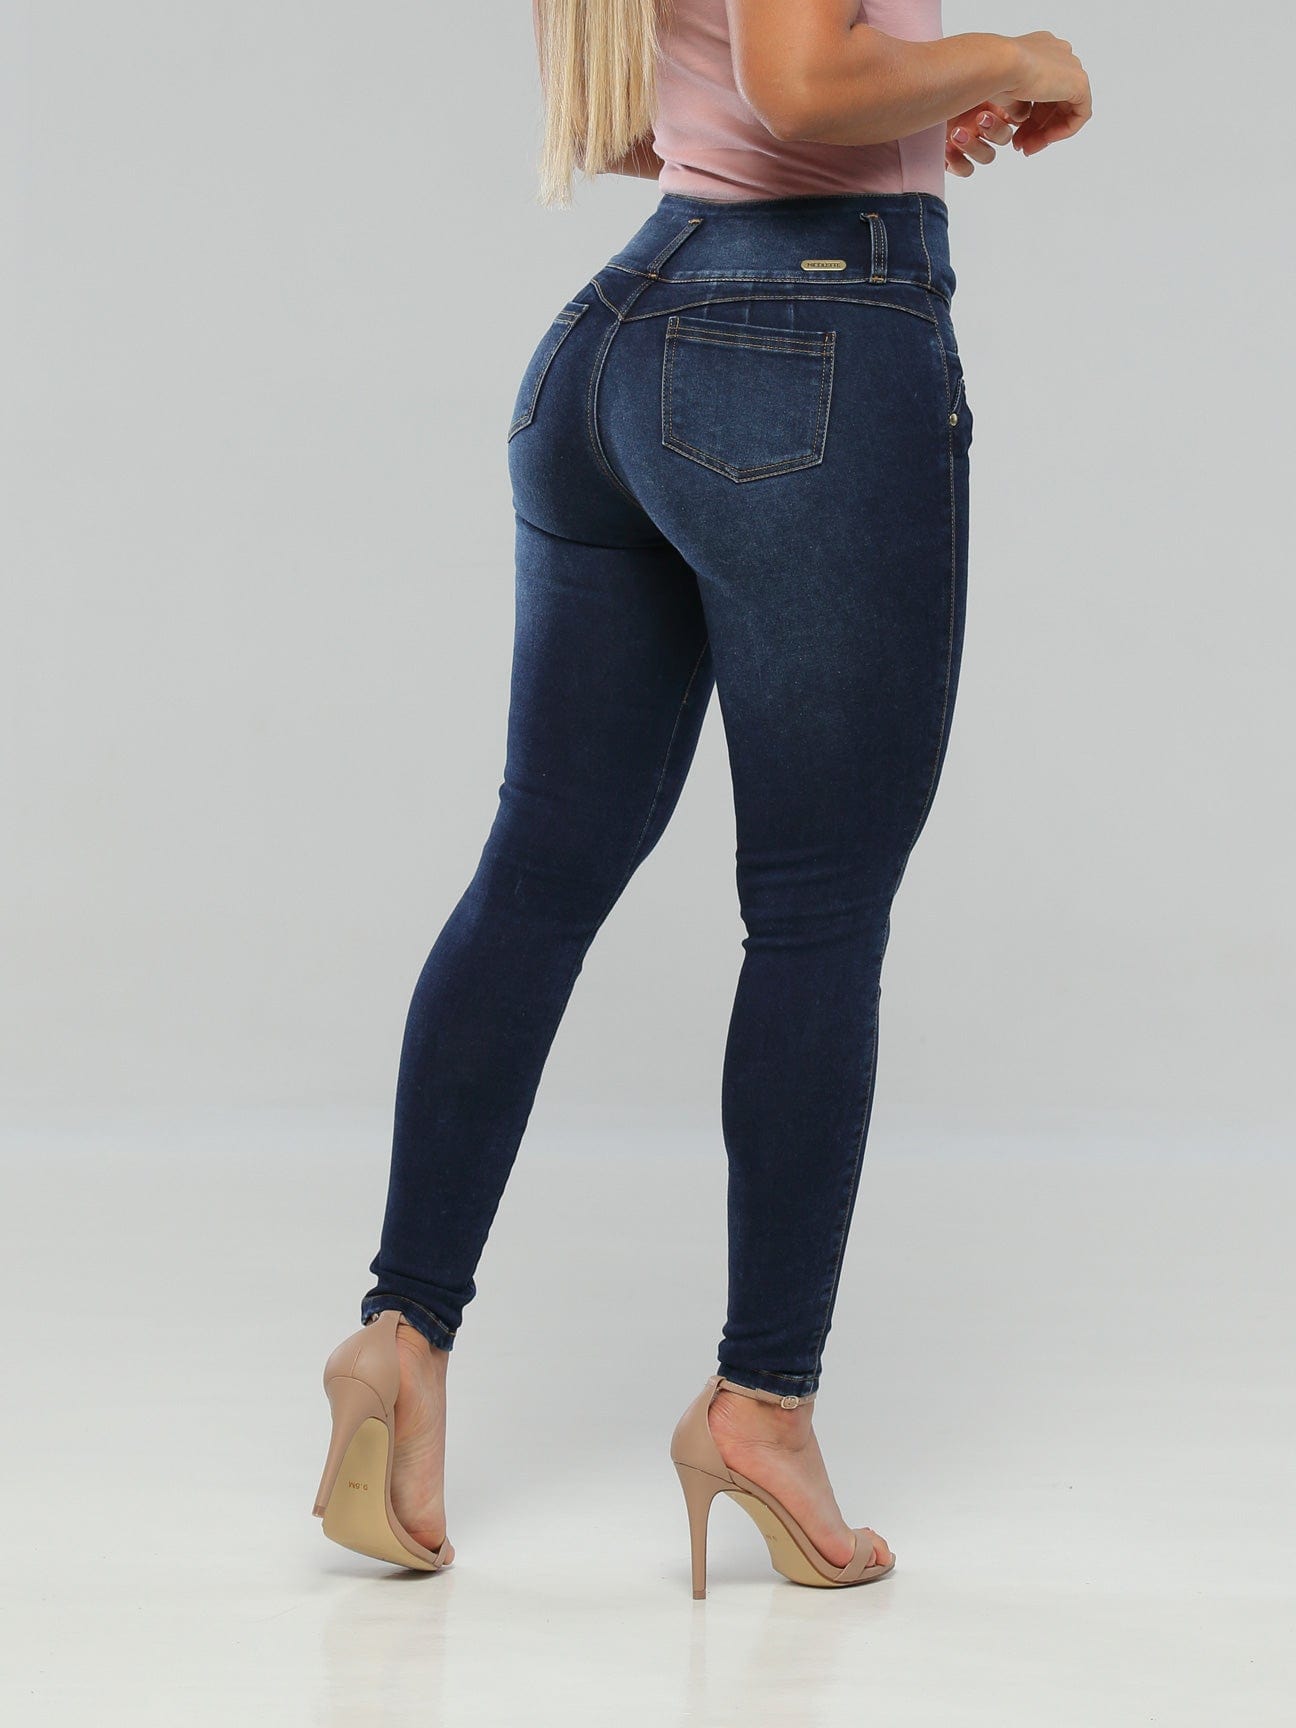 JeansCol Boutique - Hermoso jeans 💯% Colombiano con detalles de pedreria  😍 encuentralo en tu tienda JeansCol 🔥 Colombian Clothing Butt lifting  jeans!!! 👏Store 361- Boynton Beach Mall 801 N. Congress Ave.